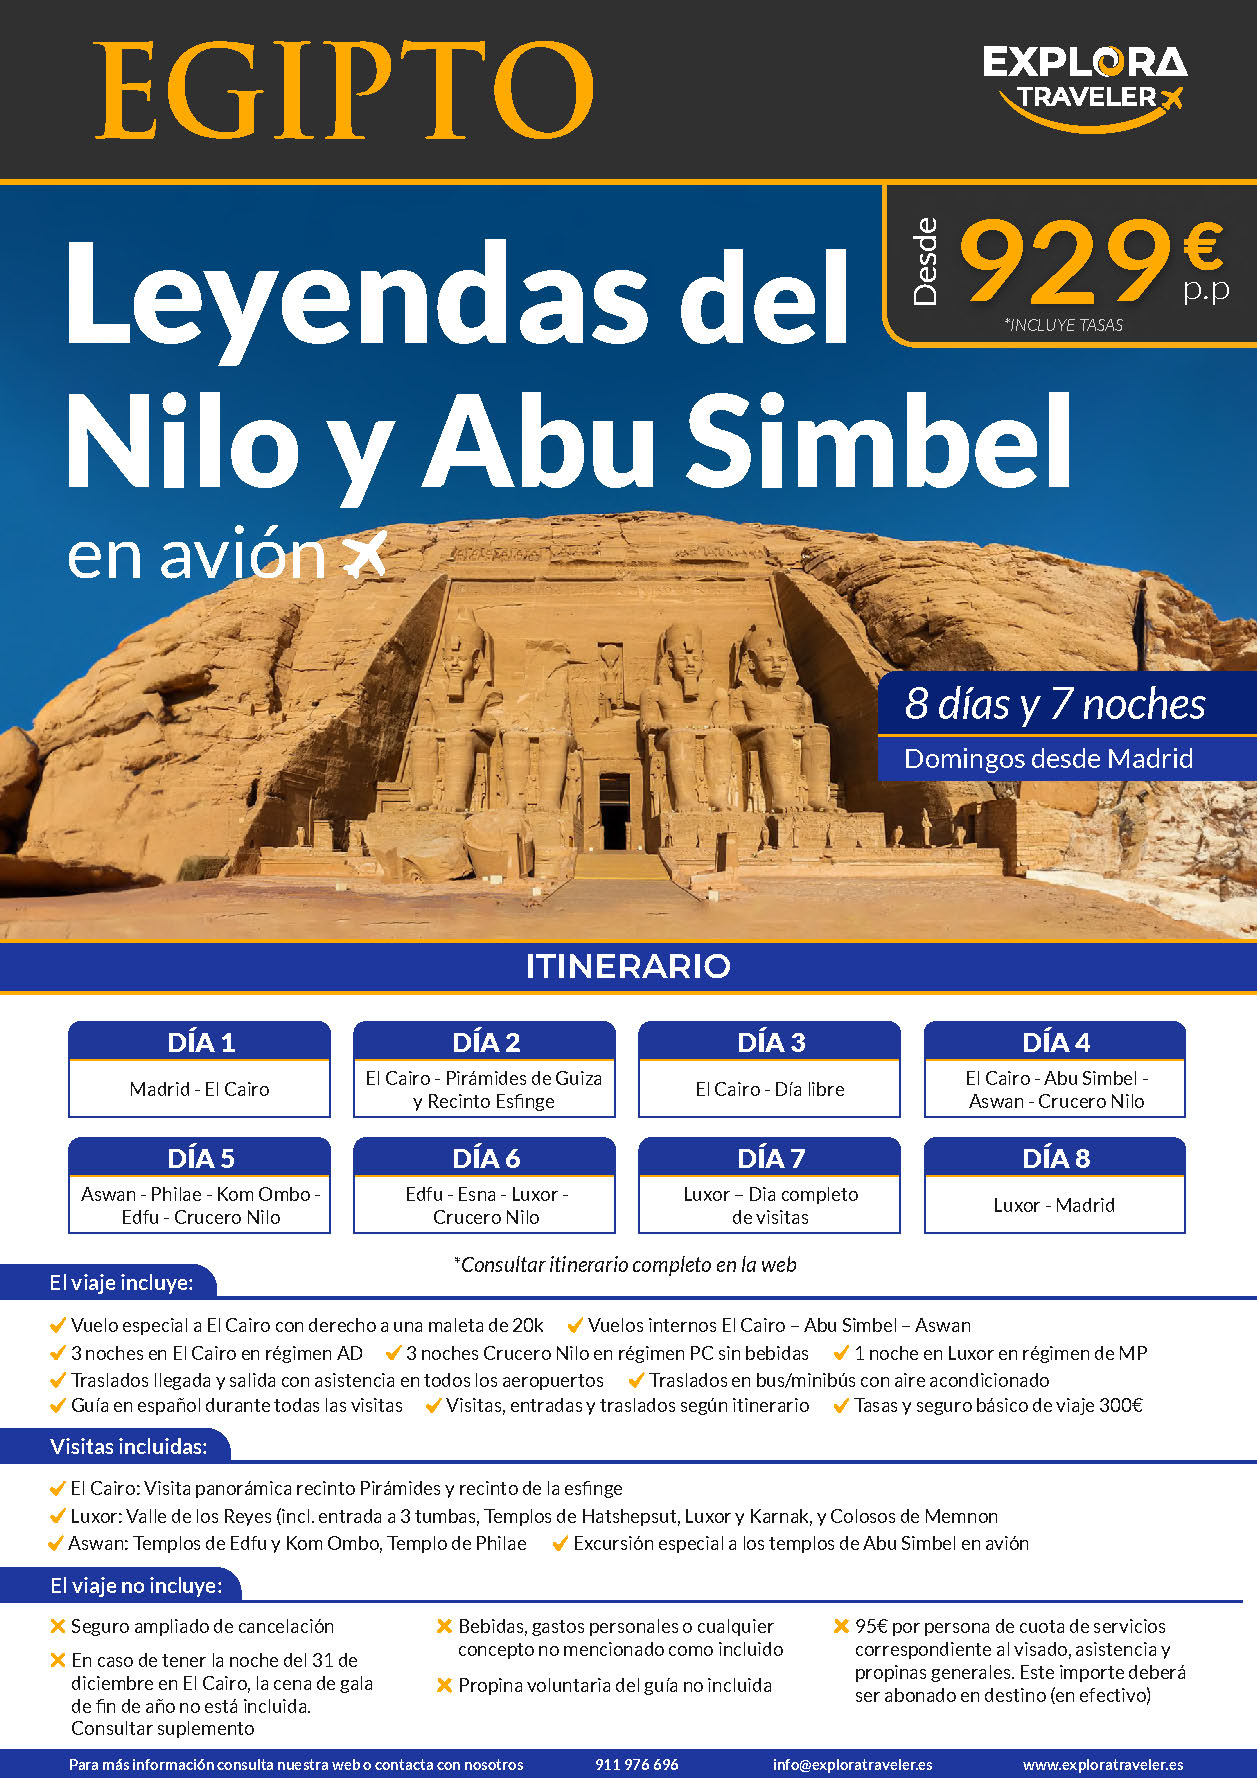 Oferta Explora Traveler Egipto Charter Leyendas del Nilo con Abu Simbel en avion 8 dias salidas 2023 vuelo directo desde Madrid